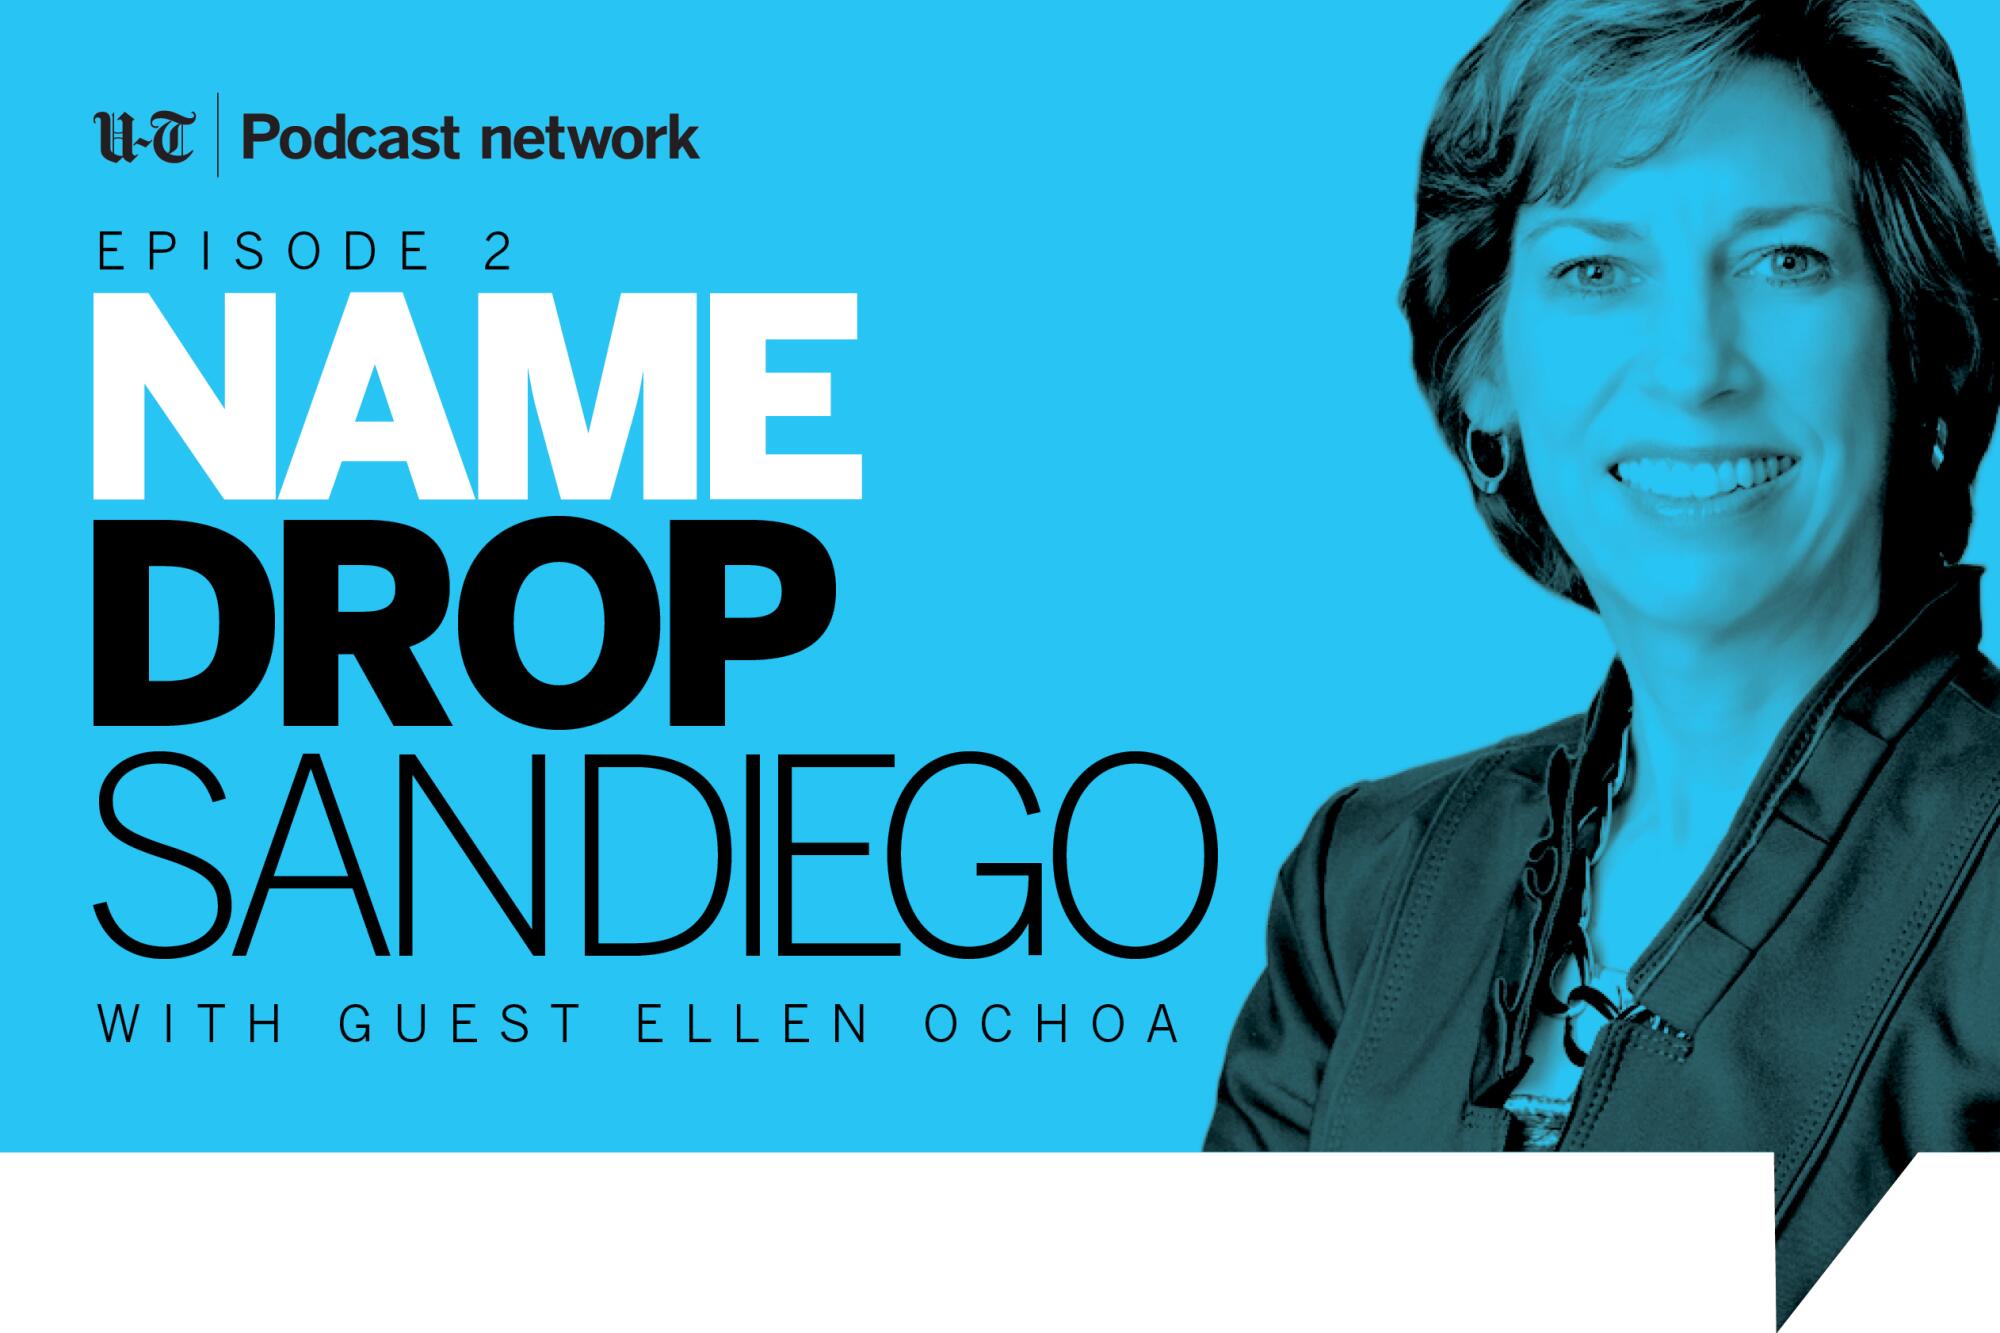 Ellen Ochoa on Name Drop San Diego.